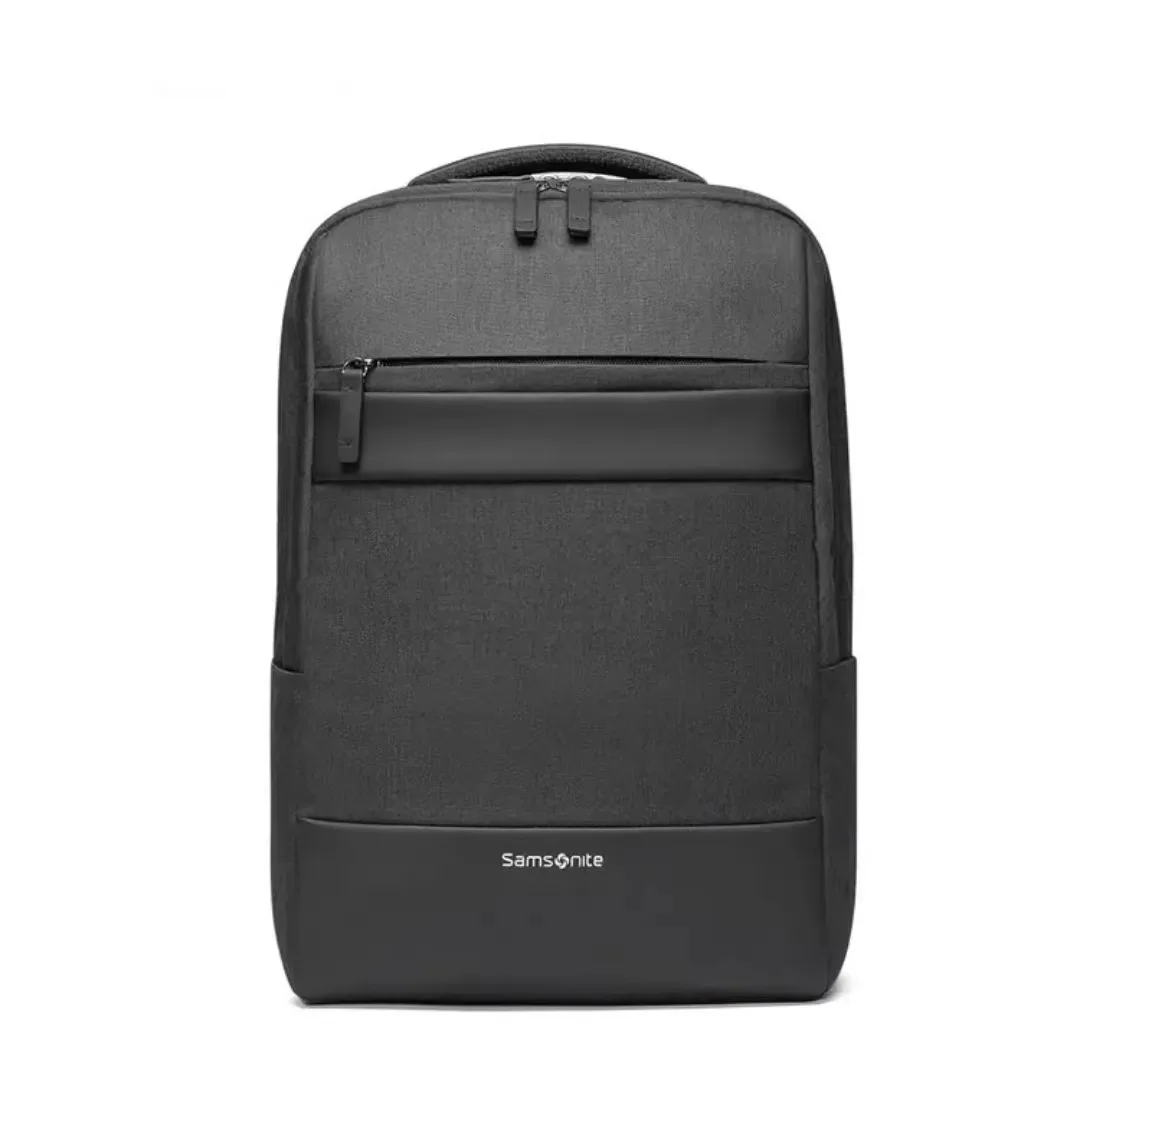 

Samsonite/ Samsonite Backpack Men's Business Fashion Korean Computer Bag Lightweight TX6*09002 Black